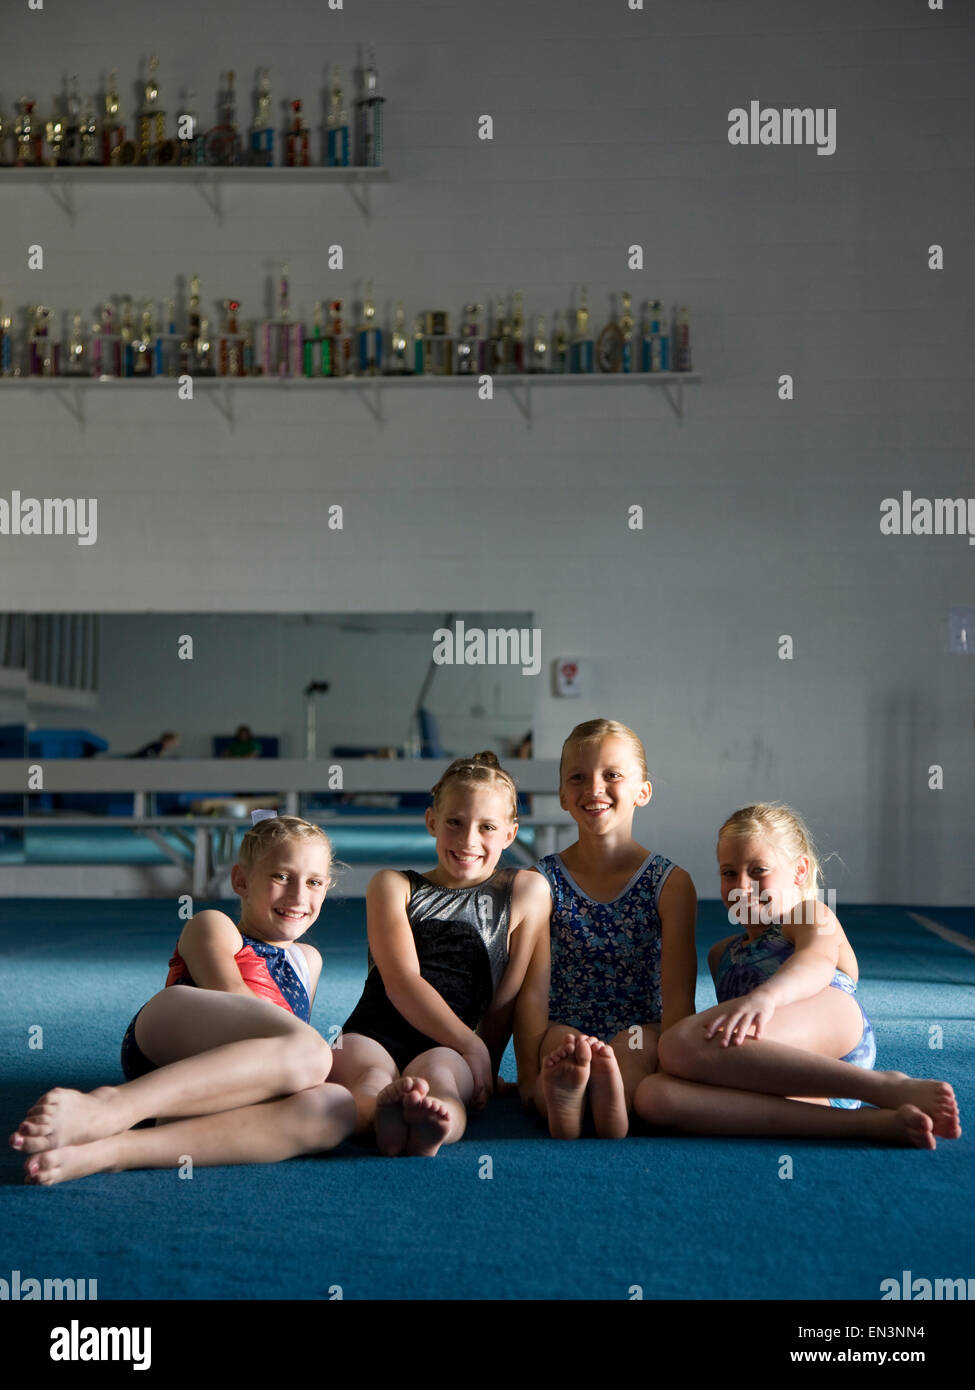 USA, Utah, Orem, portrait of girl gymnasts (8-11) in gym Stock Photo